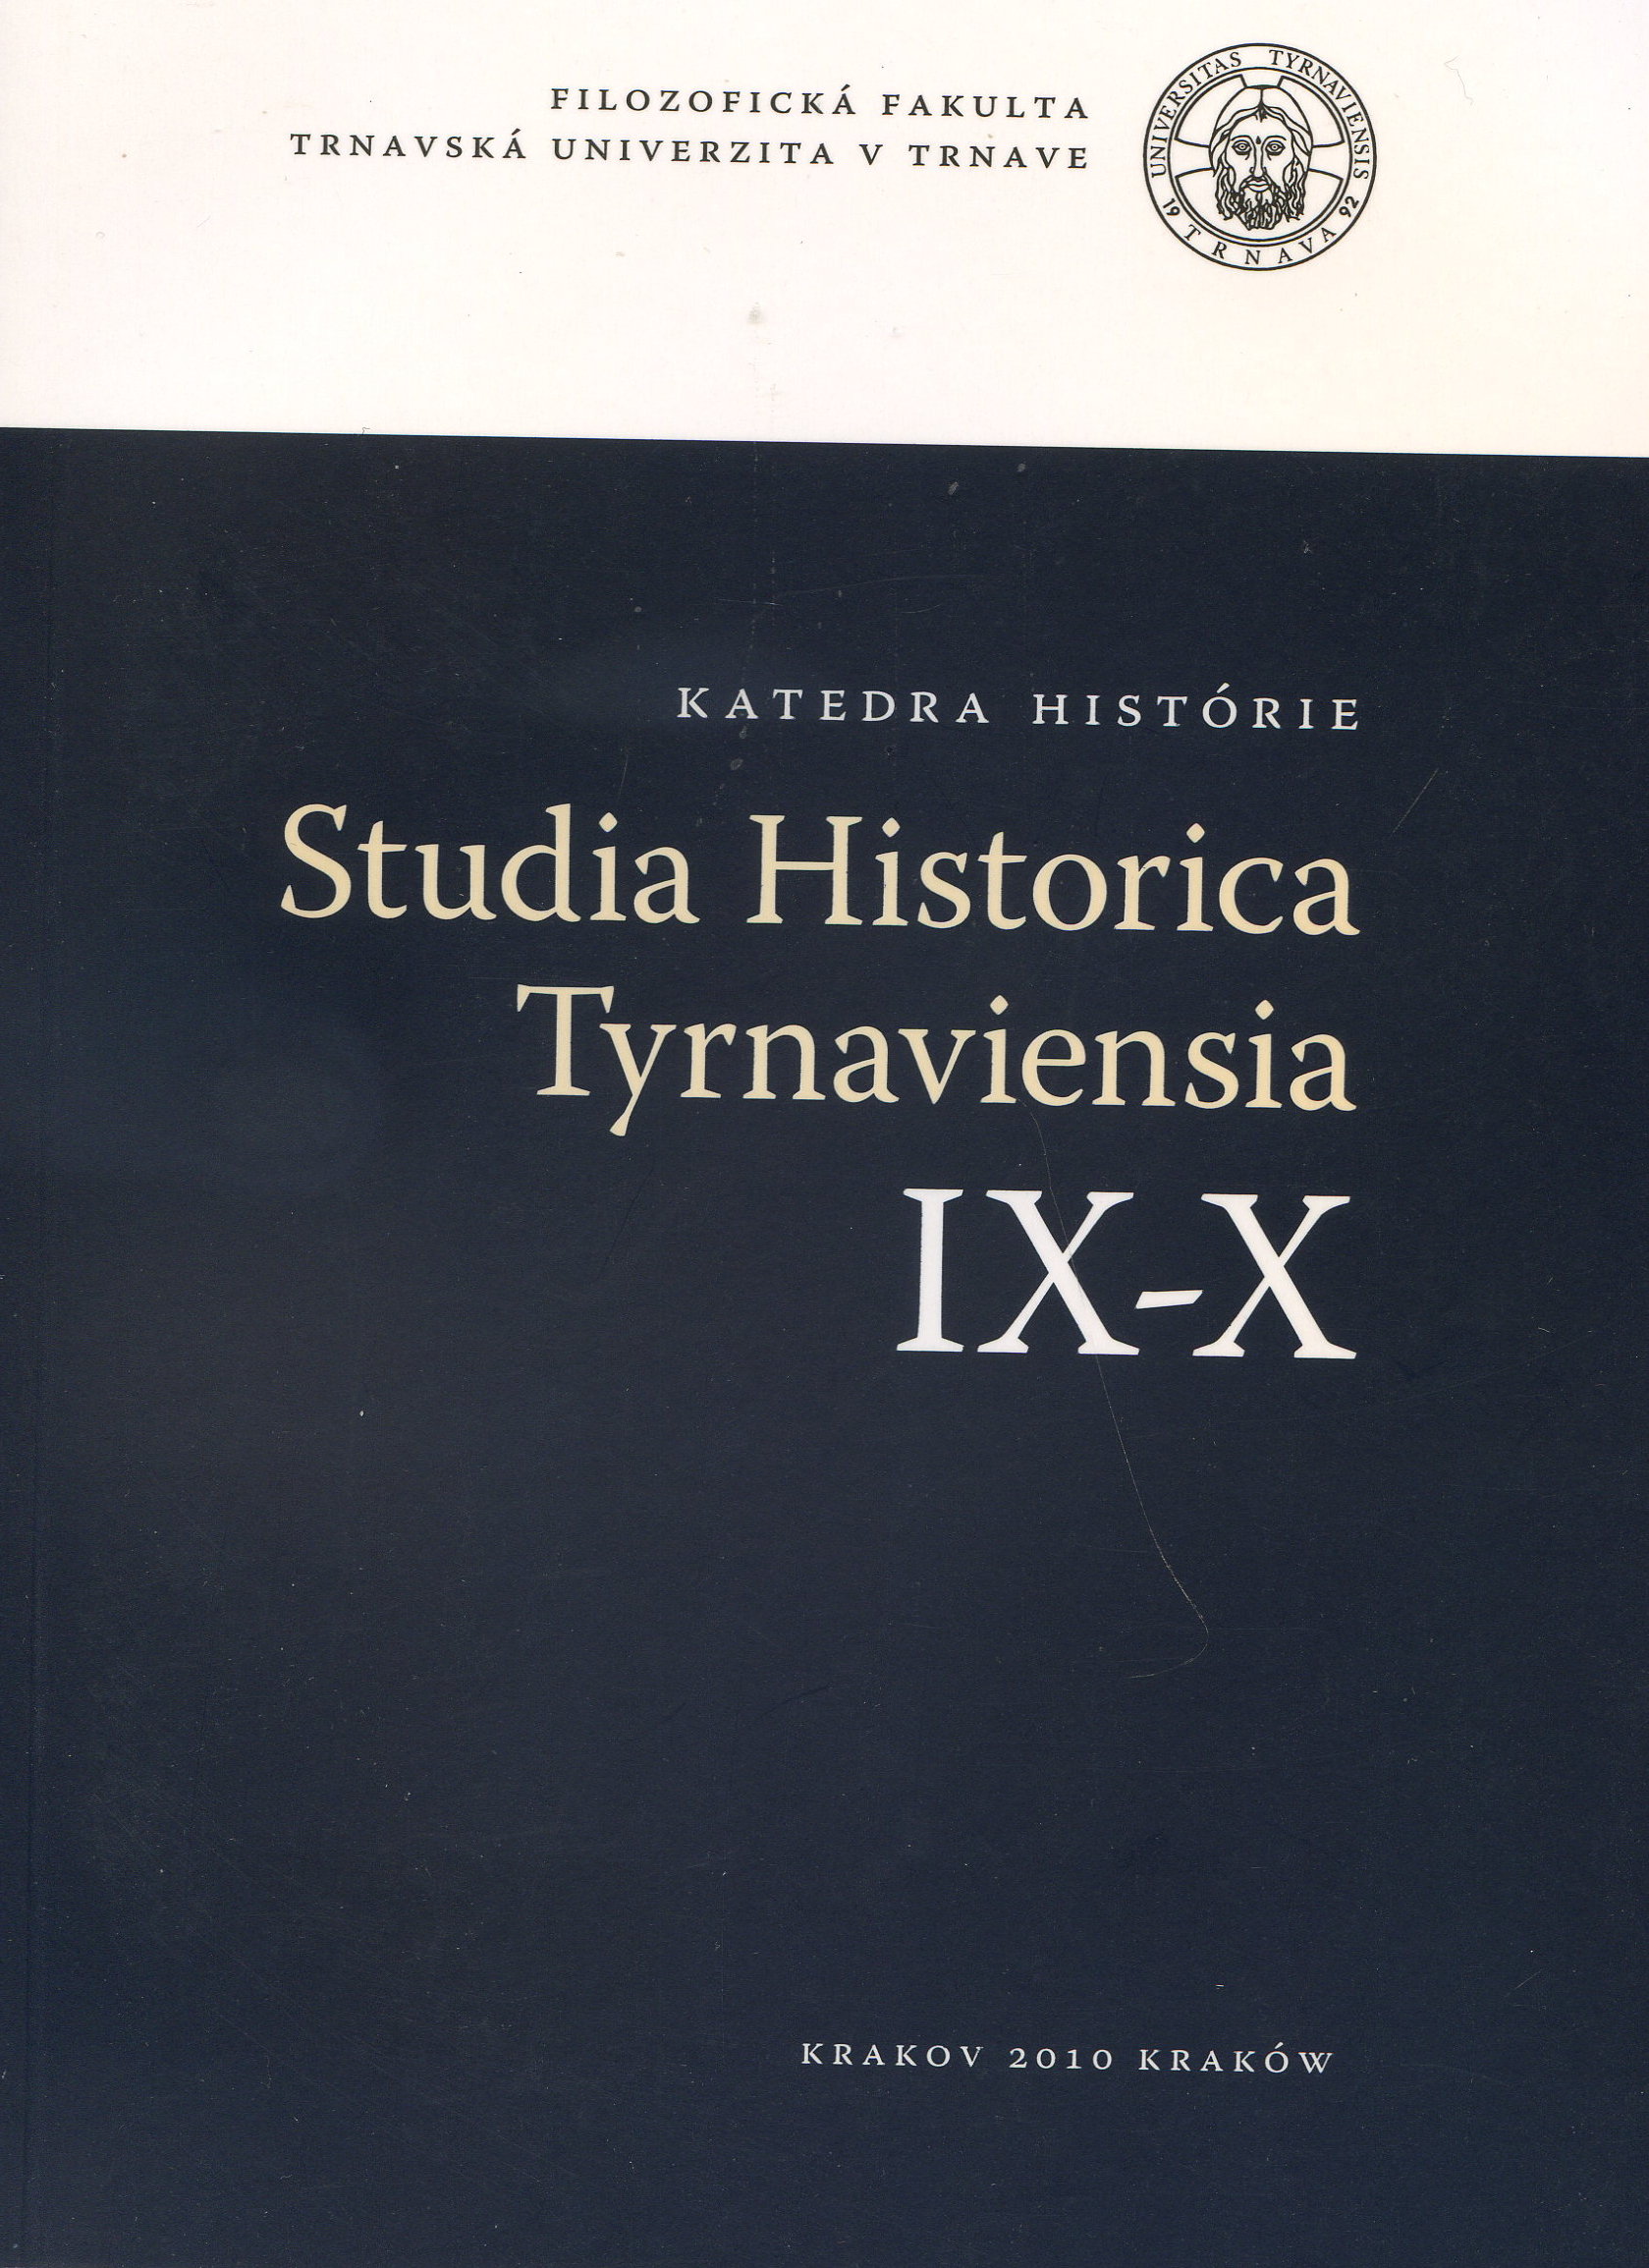 Studia historica Tyrnaviensia IX-X